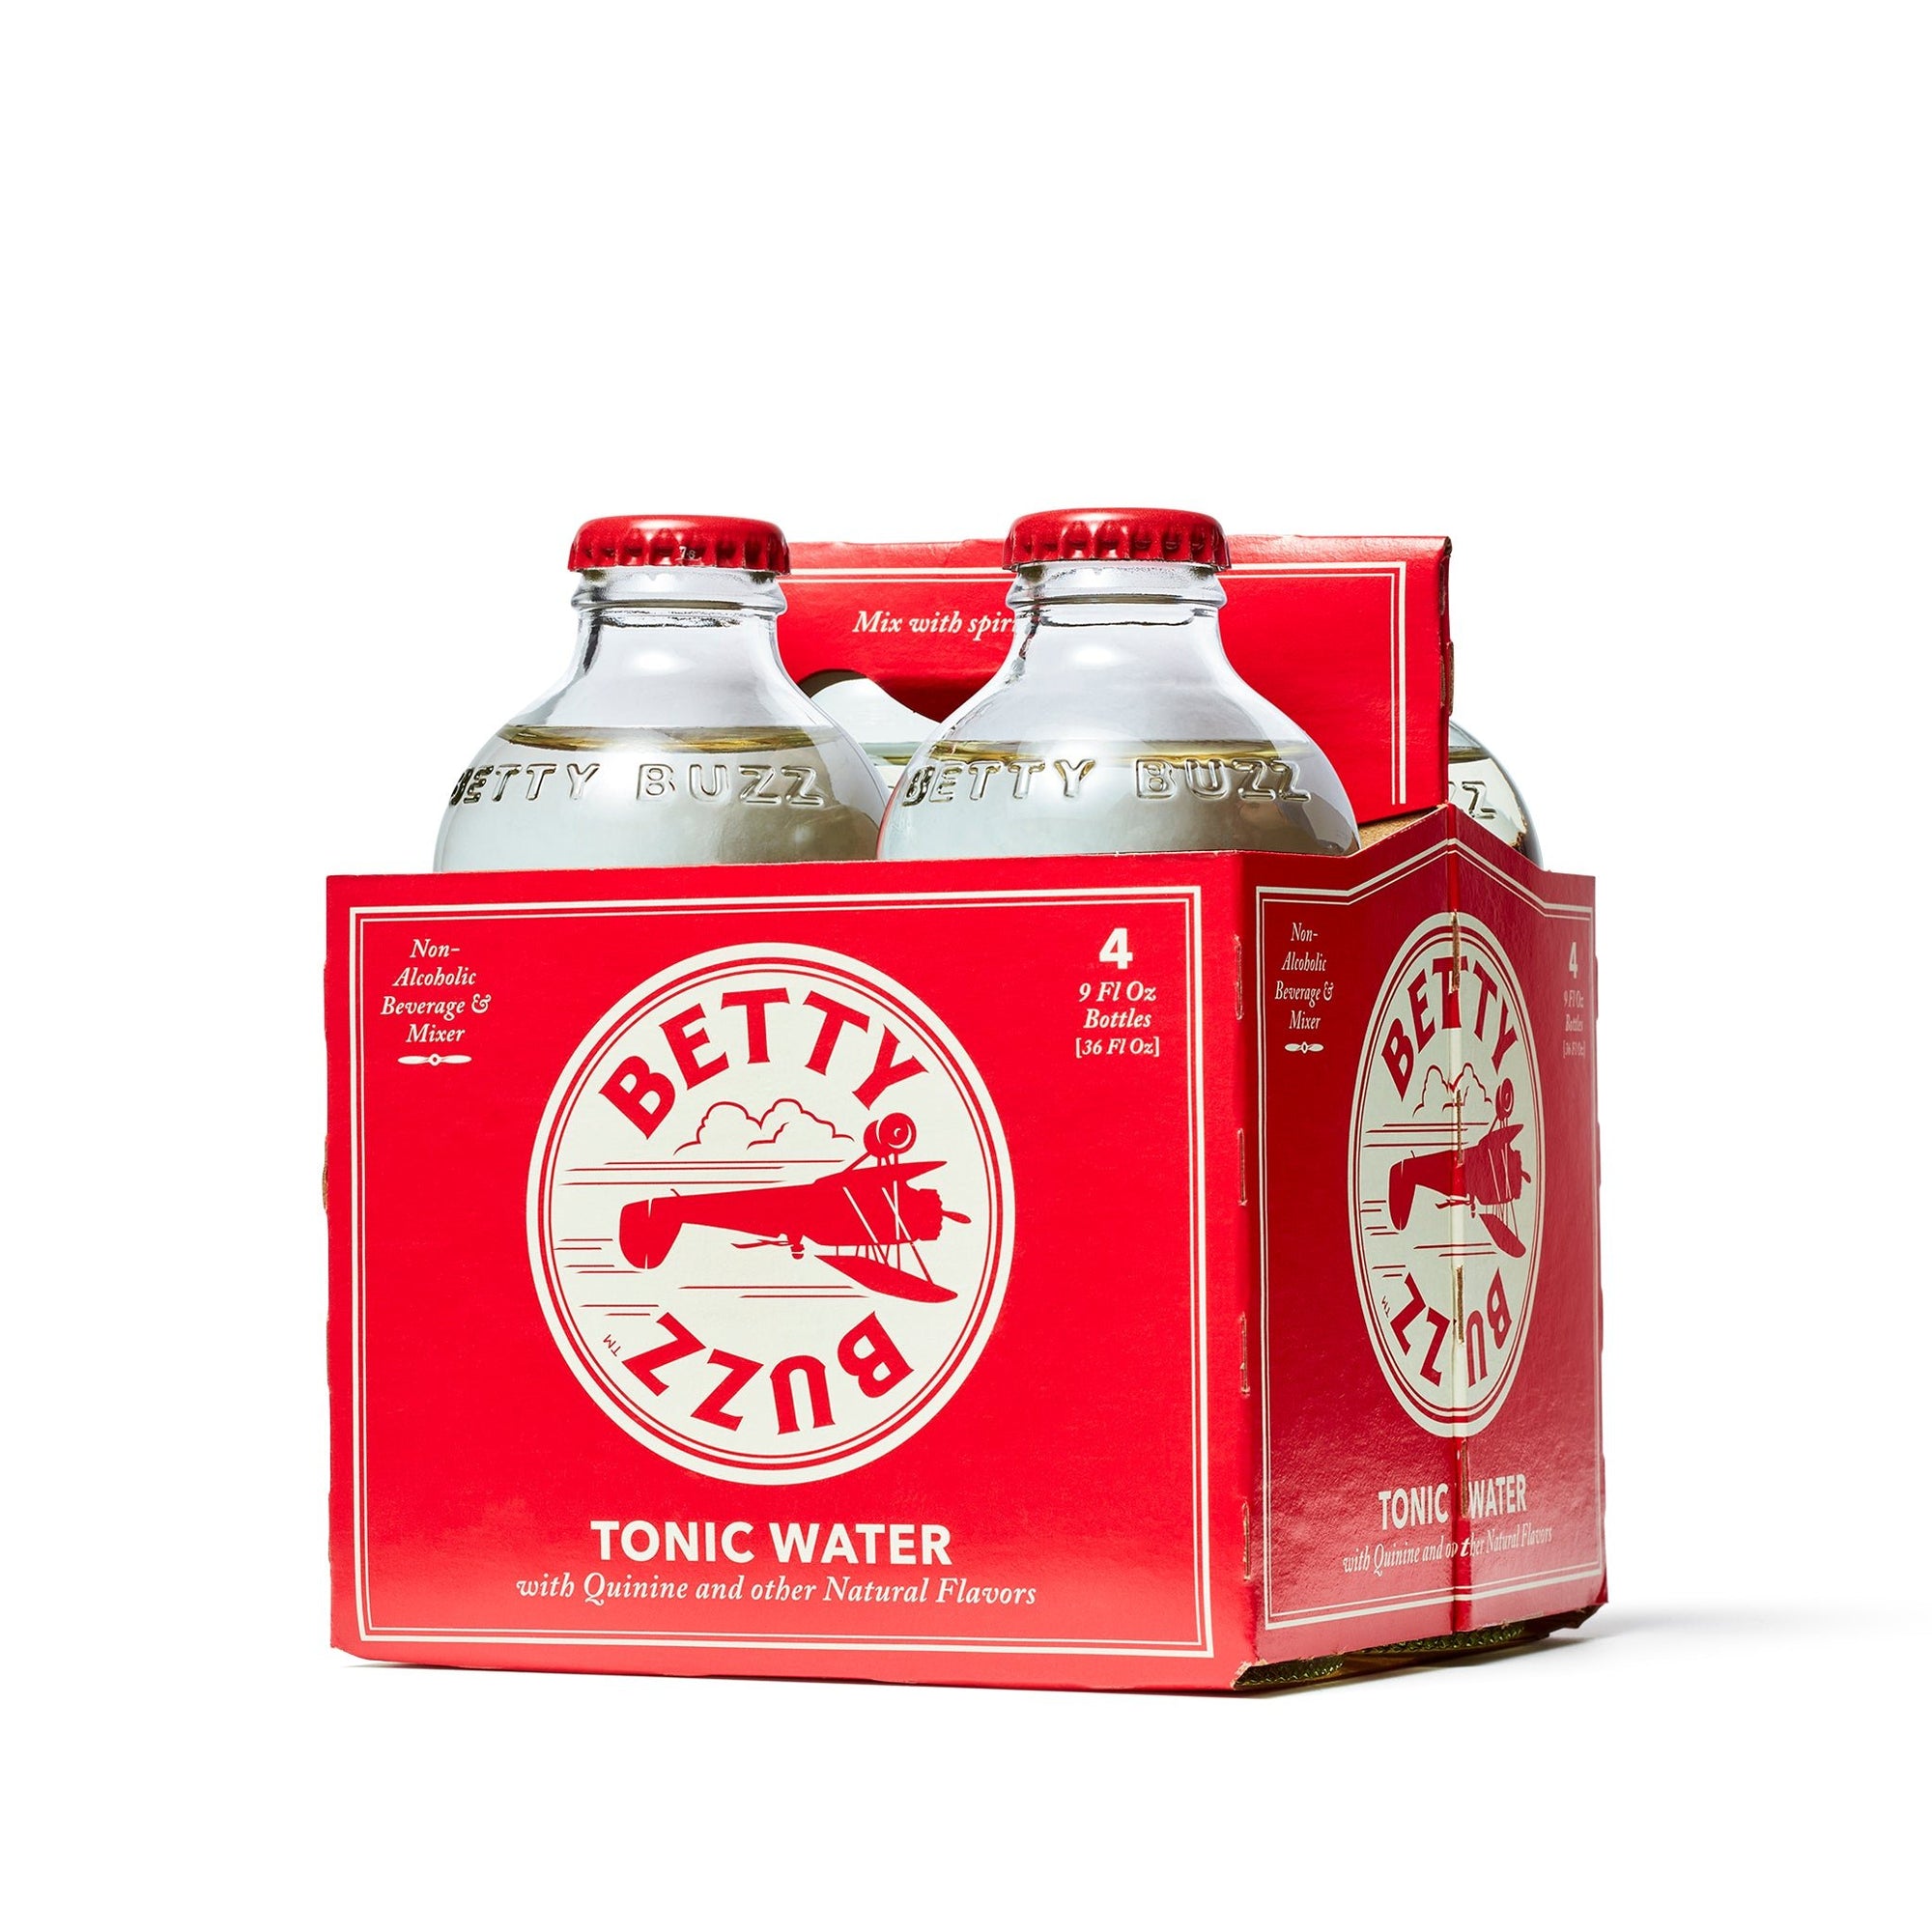 Betty Buzz Non-Alcoholic Tonic Water (4 pack) - Boisson